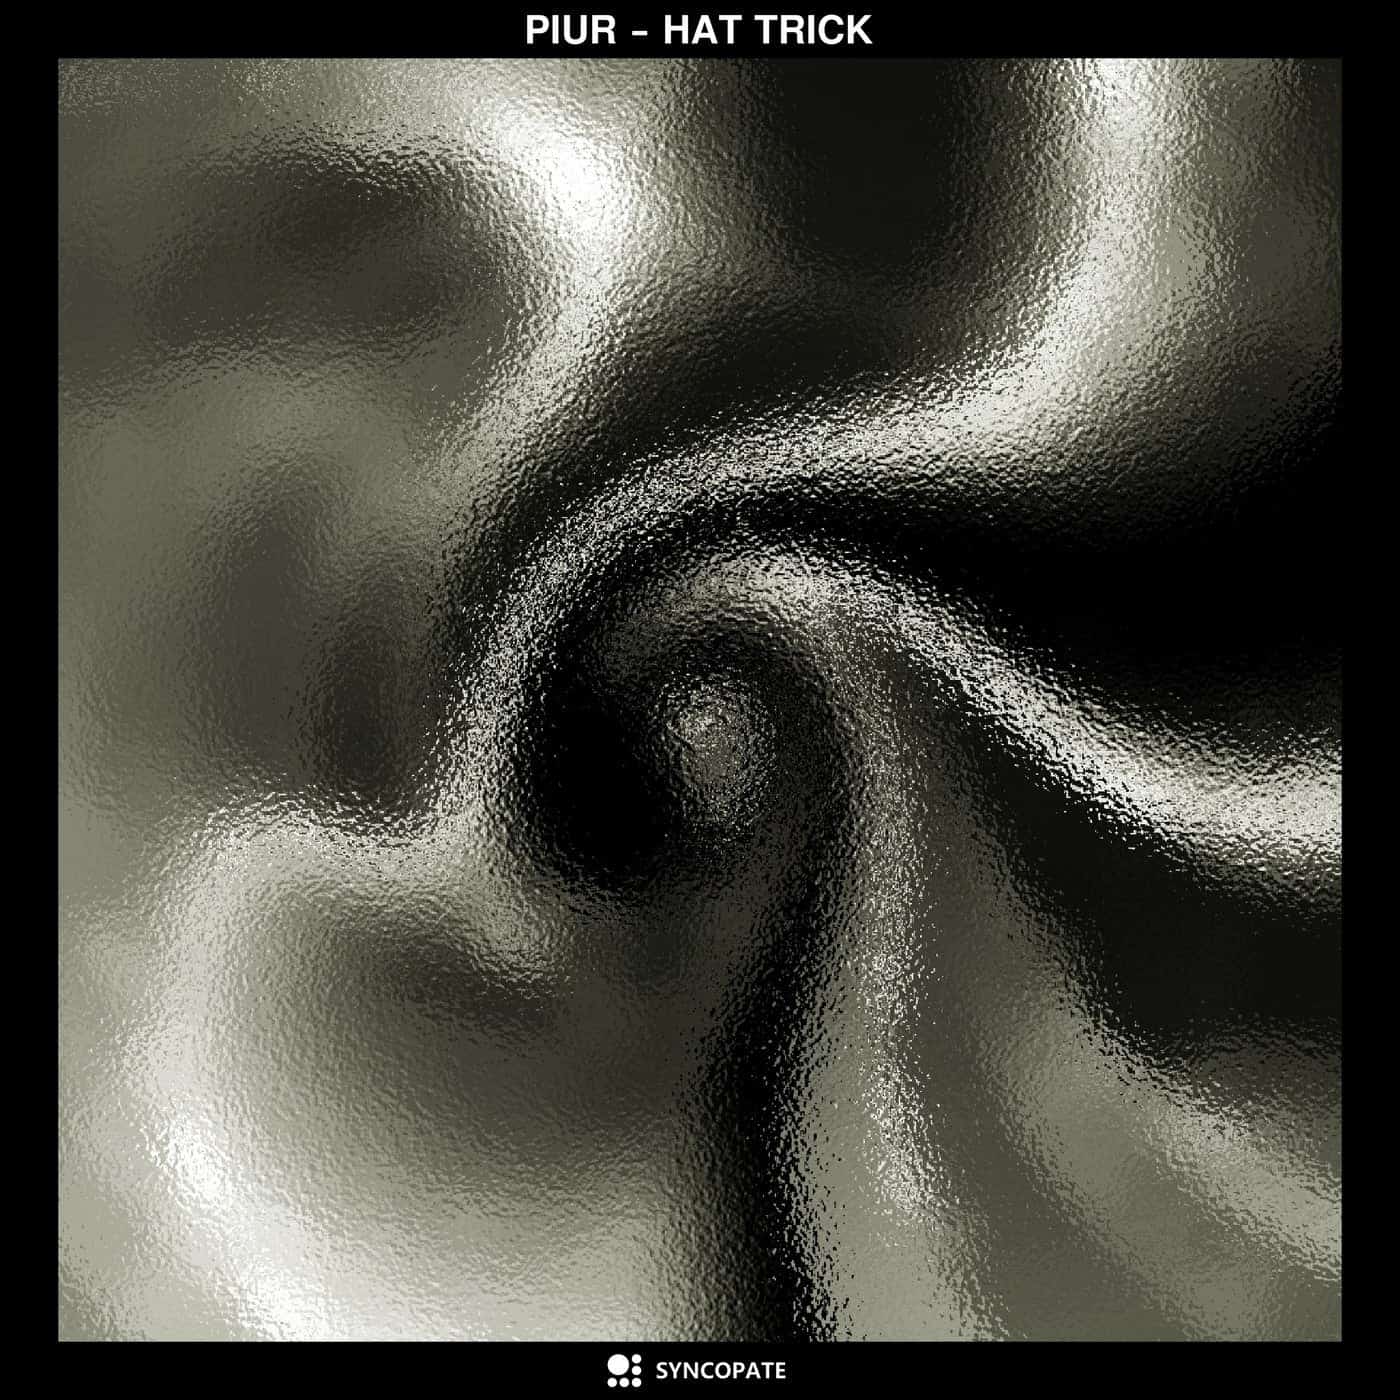 Download PIUR - Hat Trick on Electrobuzz